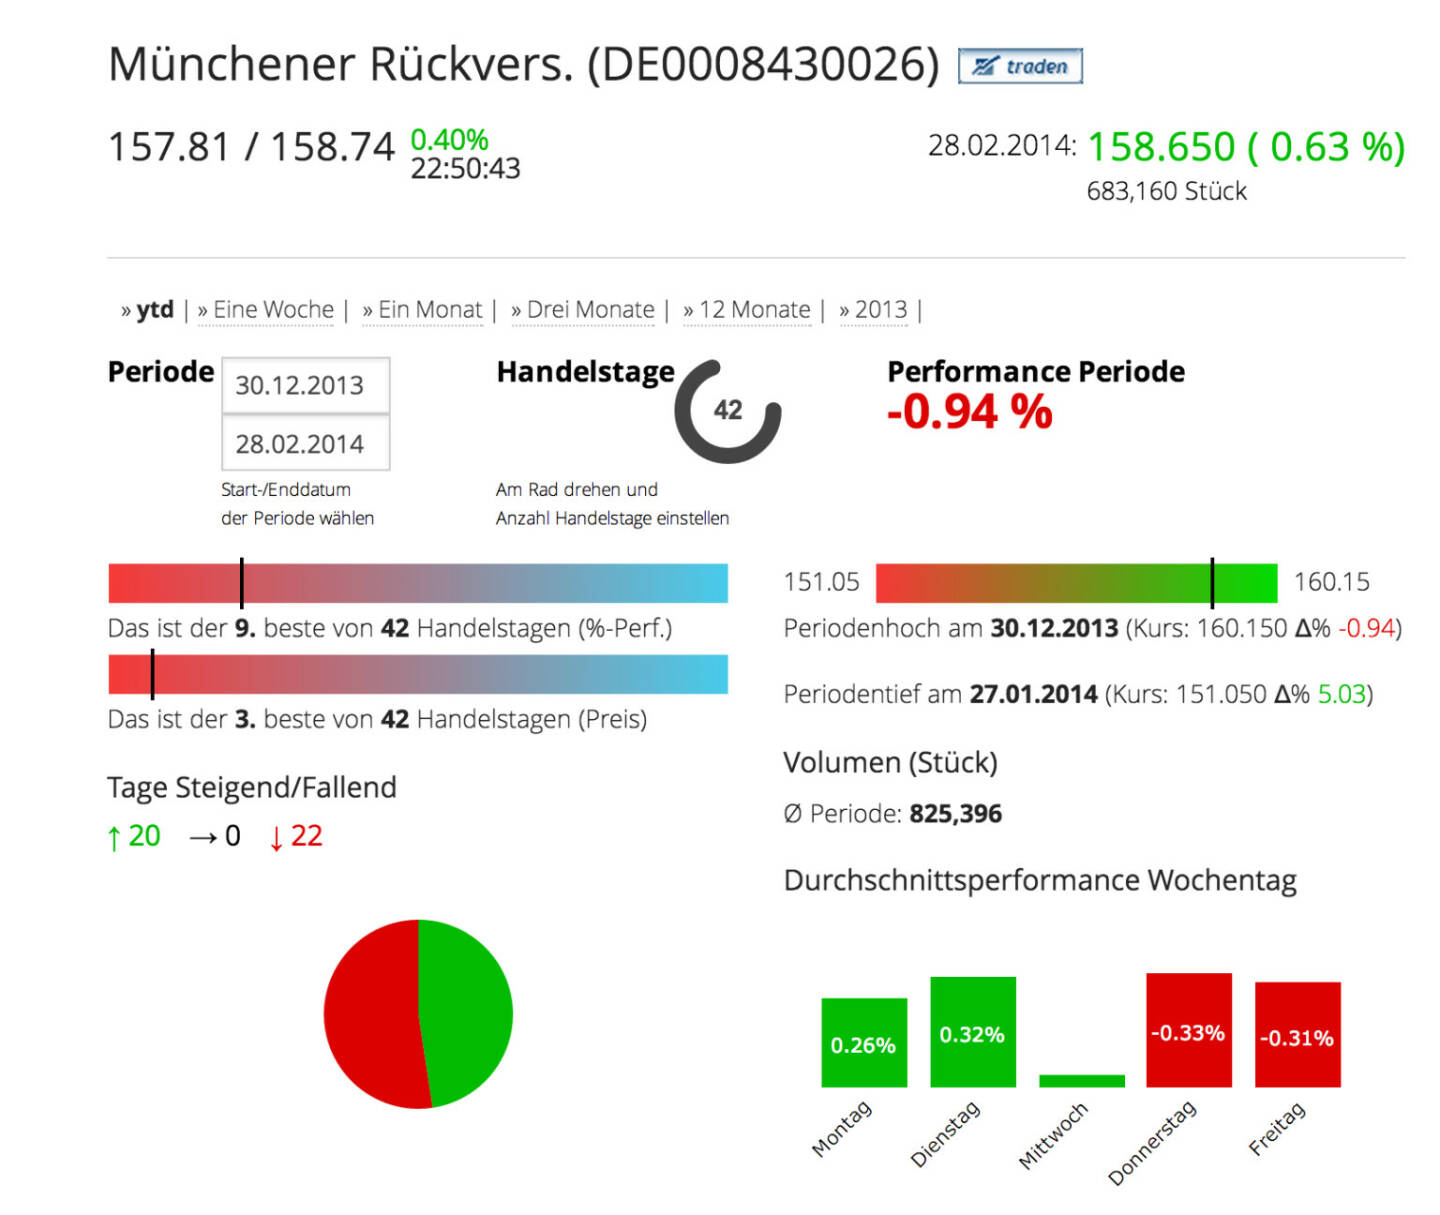 Die Münchner Rückversicherung im Börse Social Network, http://boerse-social.com/launch/aktie/munchener_ruckvers-ges_ag_vinknamens-akti_on